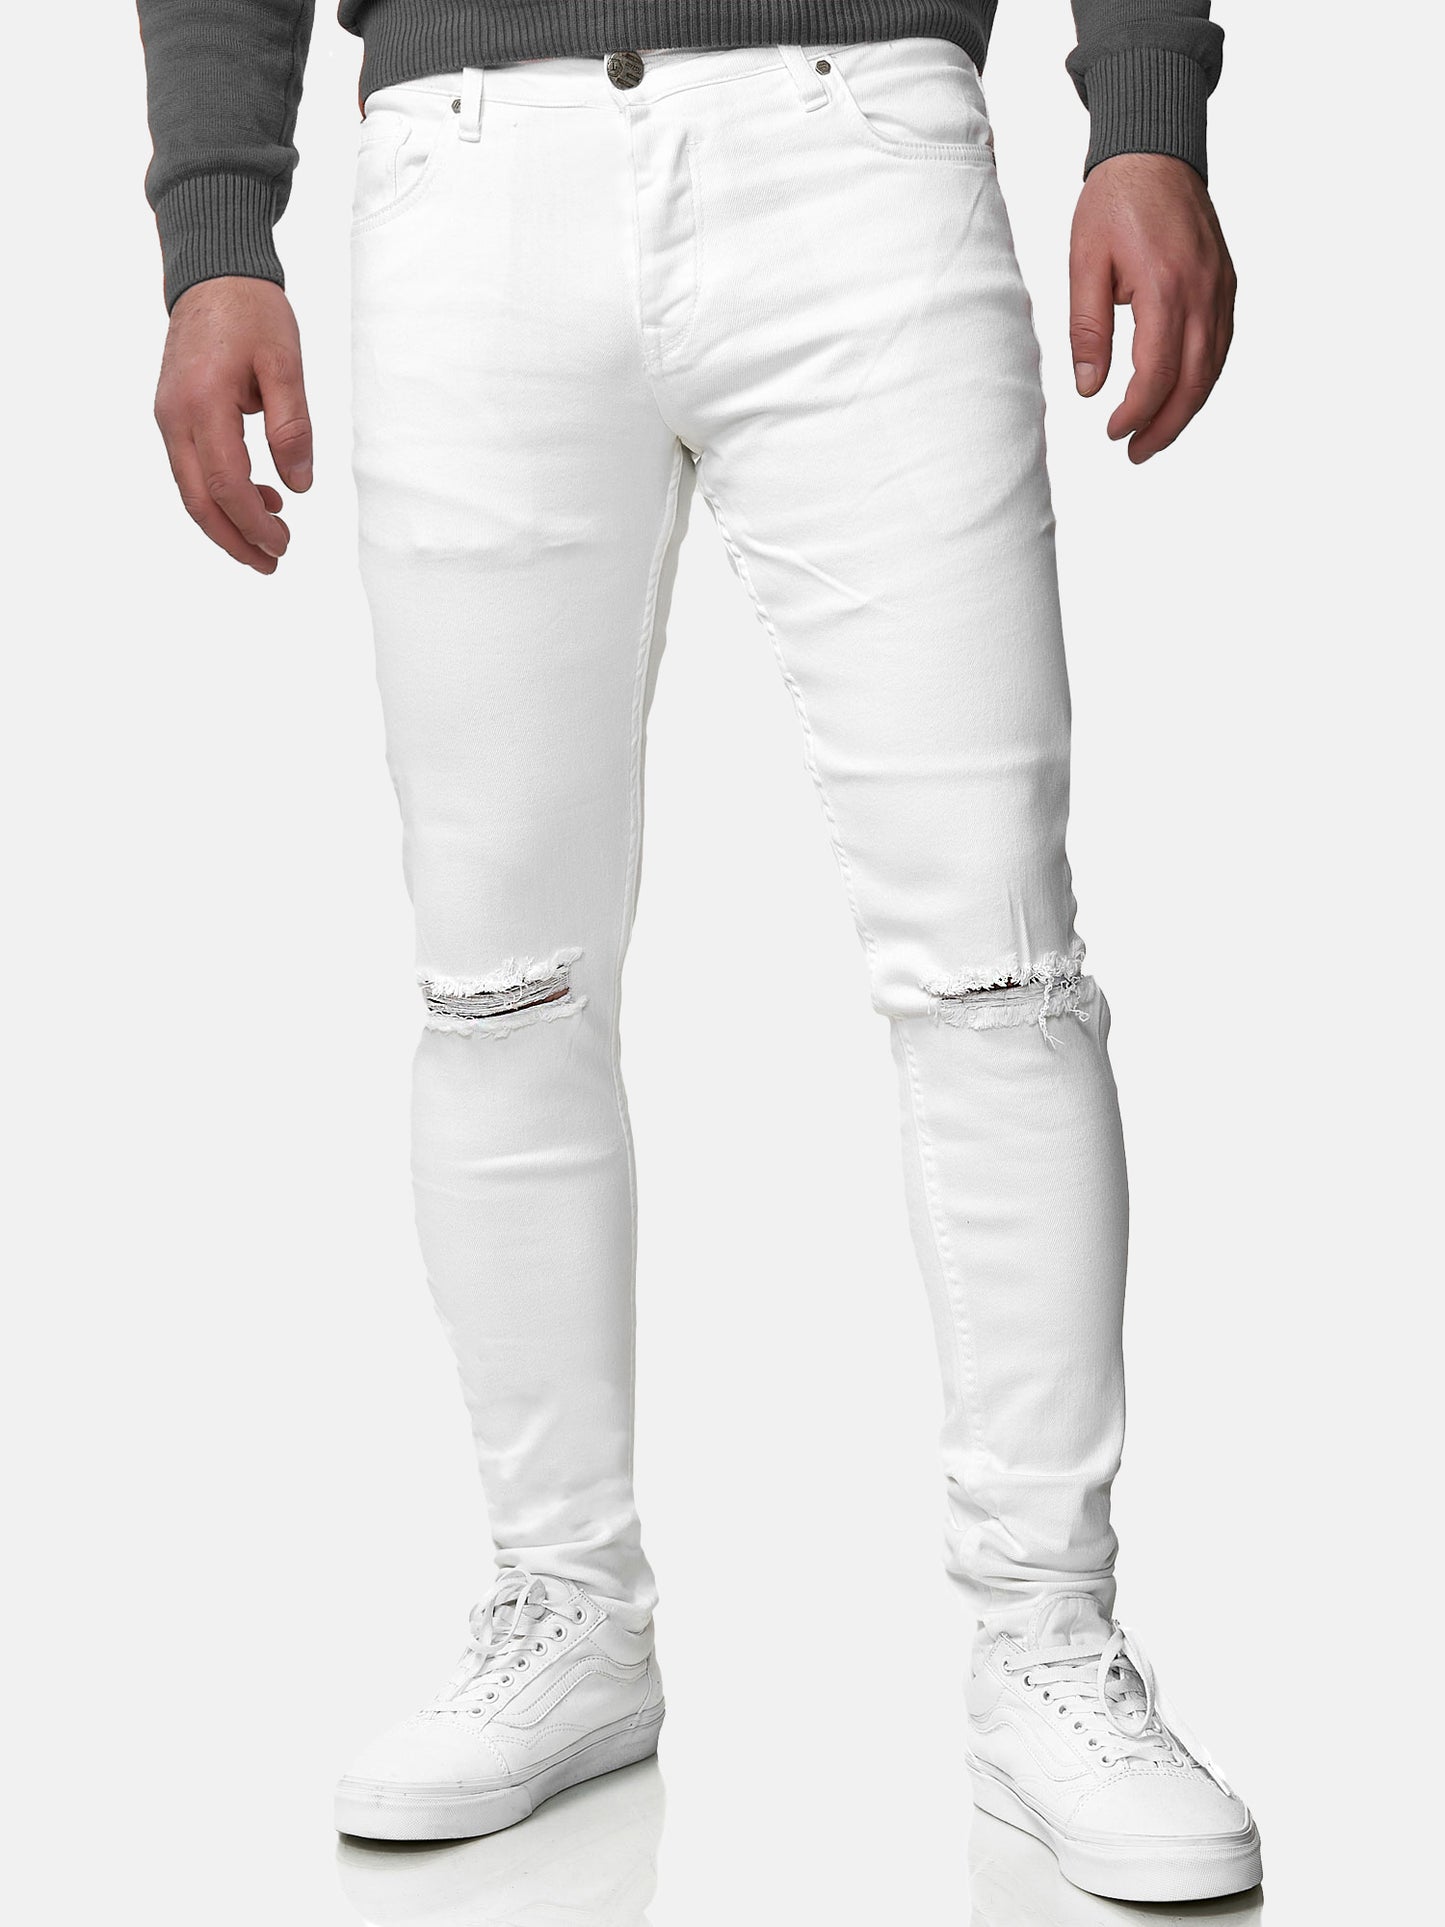 Tazzio Herren Jeans Skinny Fit im Destroyed Look A100